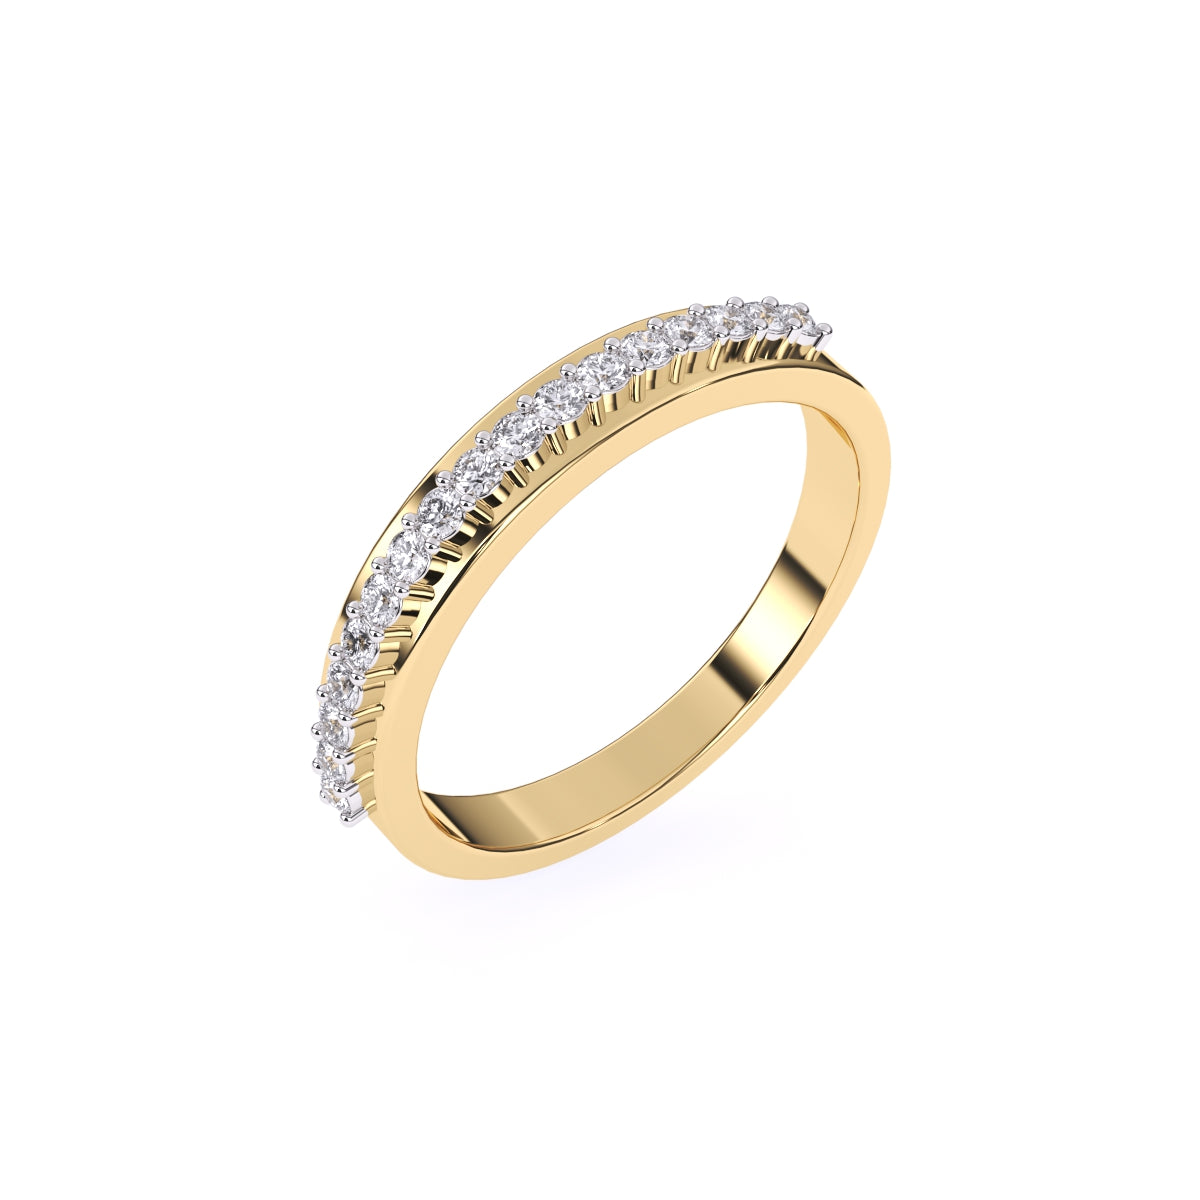 Shared Prong Diamond Eternity Ring in 14K White Gold - John Marmo